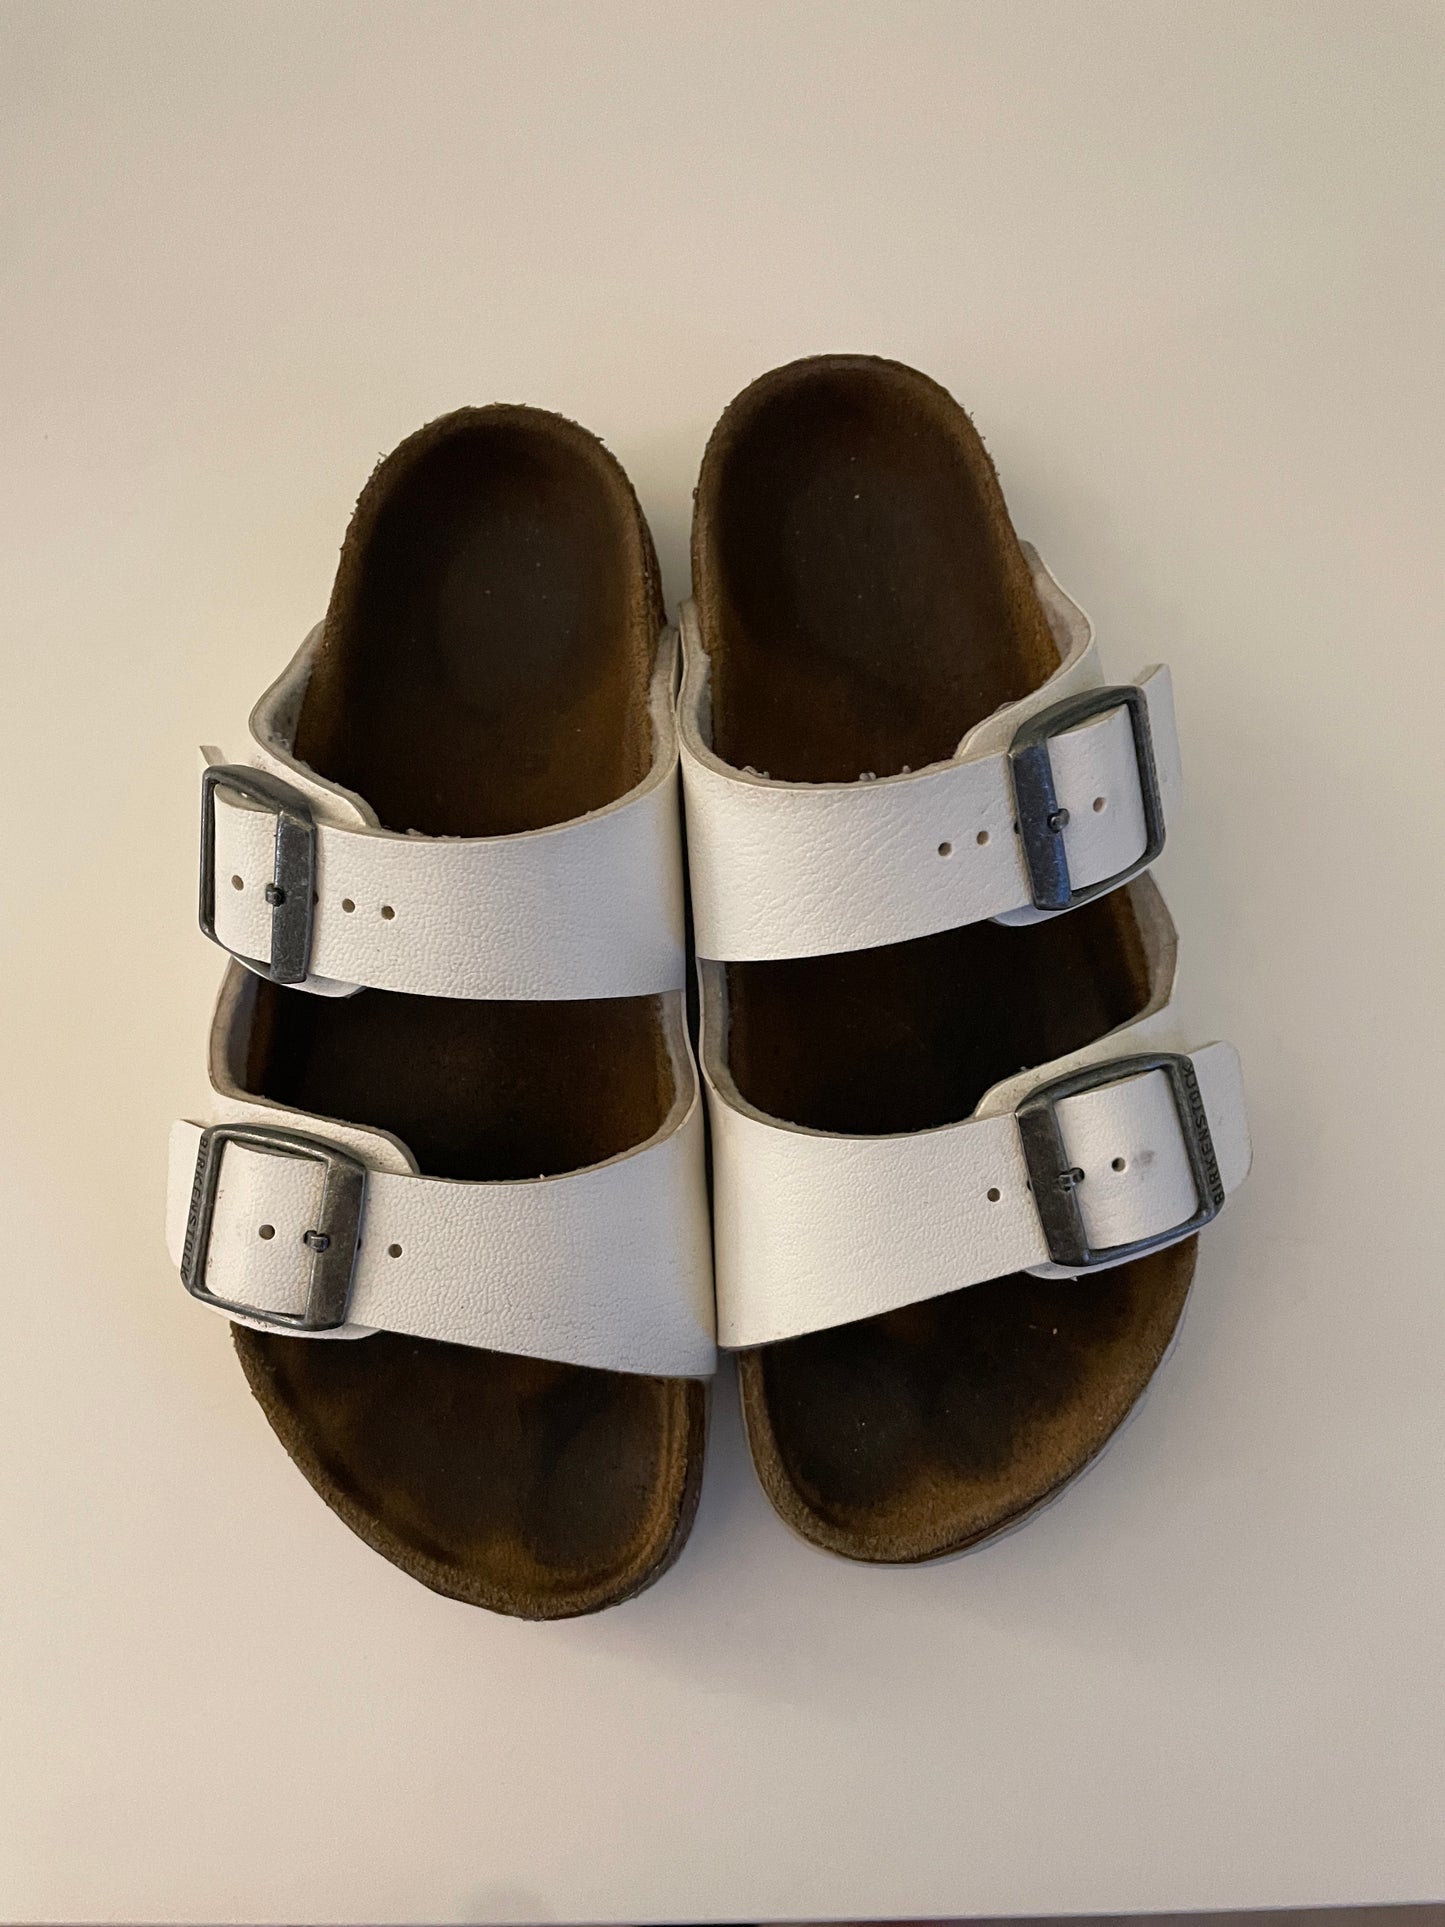 Little Girls White Birkenstock Sandals Size 30EU; 12-12.5 US